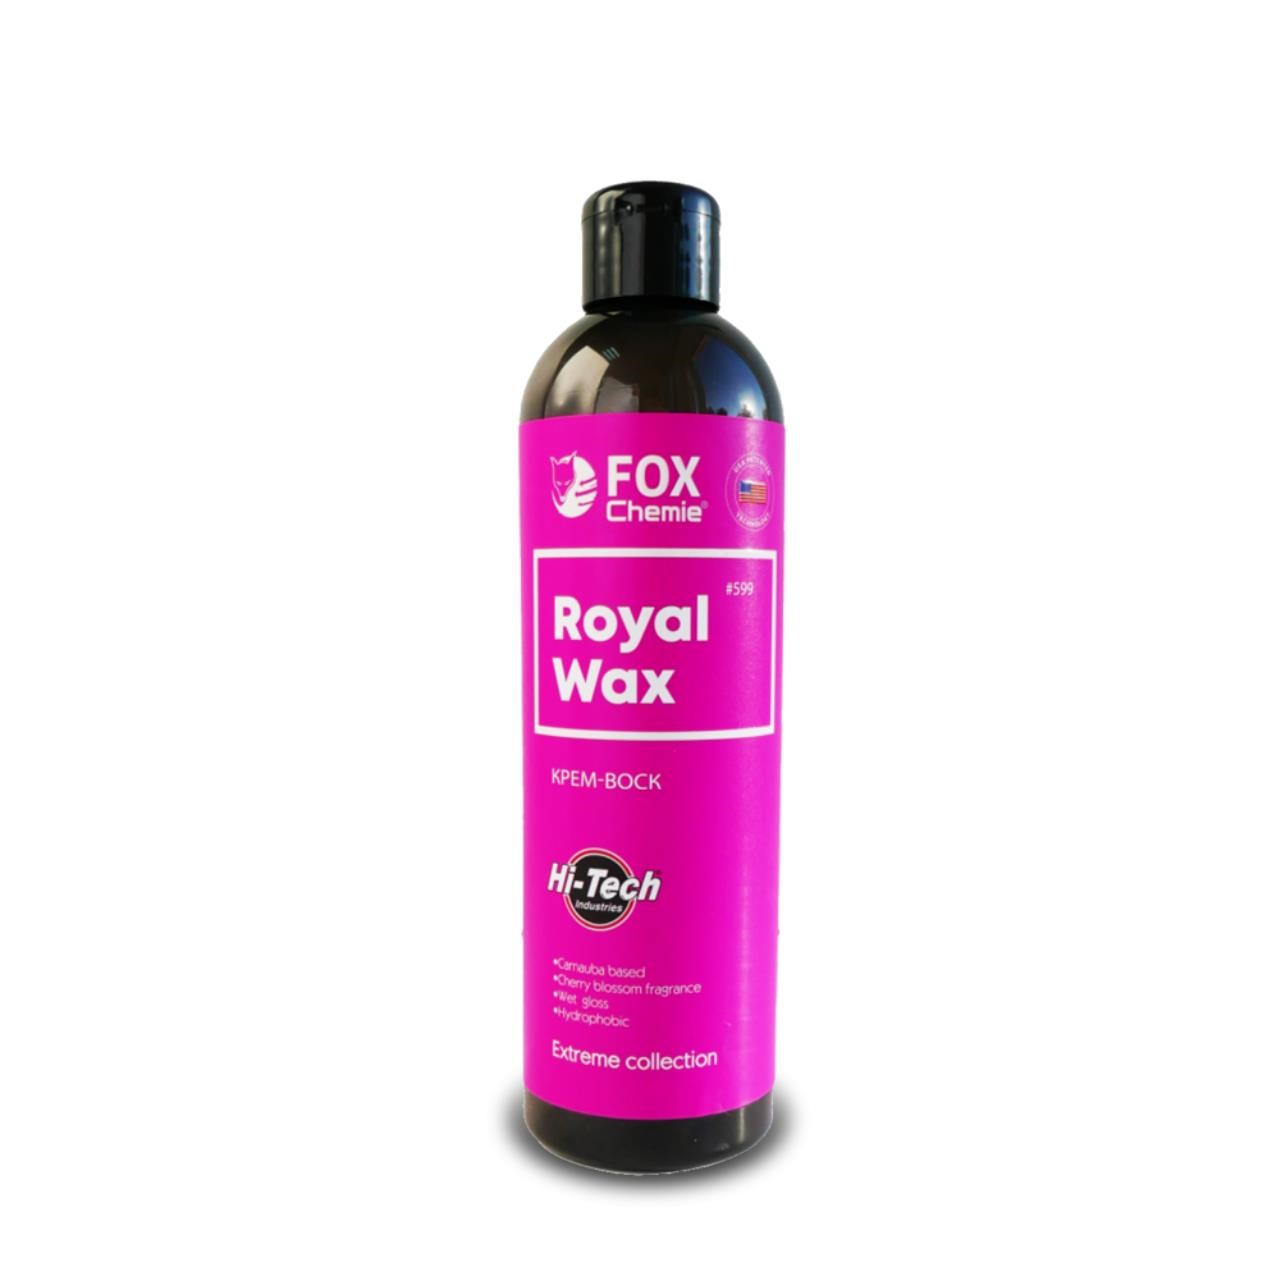 Fox chemie. Крем воск Роял Вакс. Воск Fox. Fox Chemie полироль. Fox Chemie Royal Wax крем-воск для защиты кузова с вишневым ароматом 500мл.